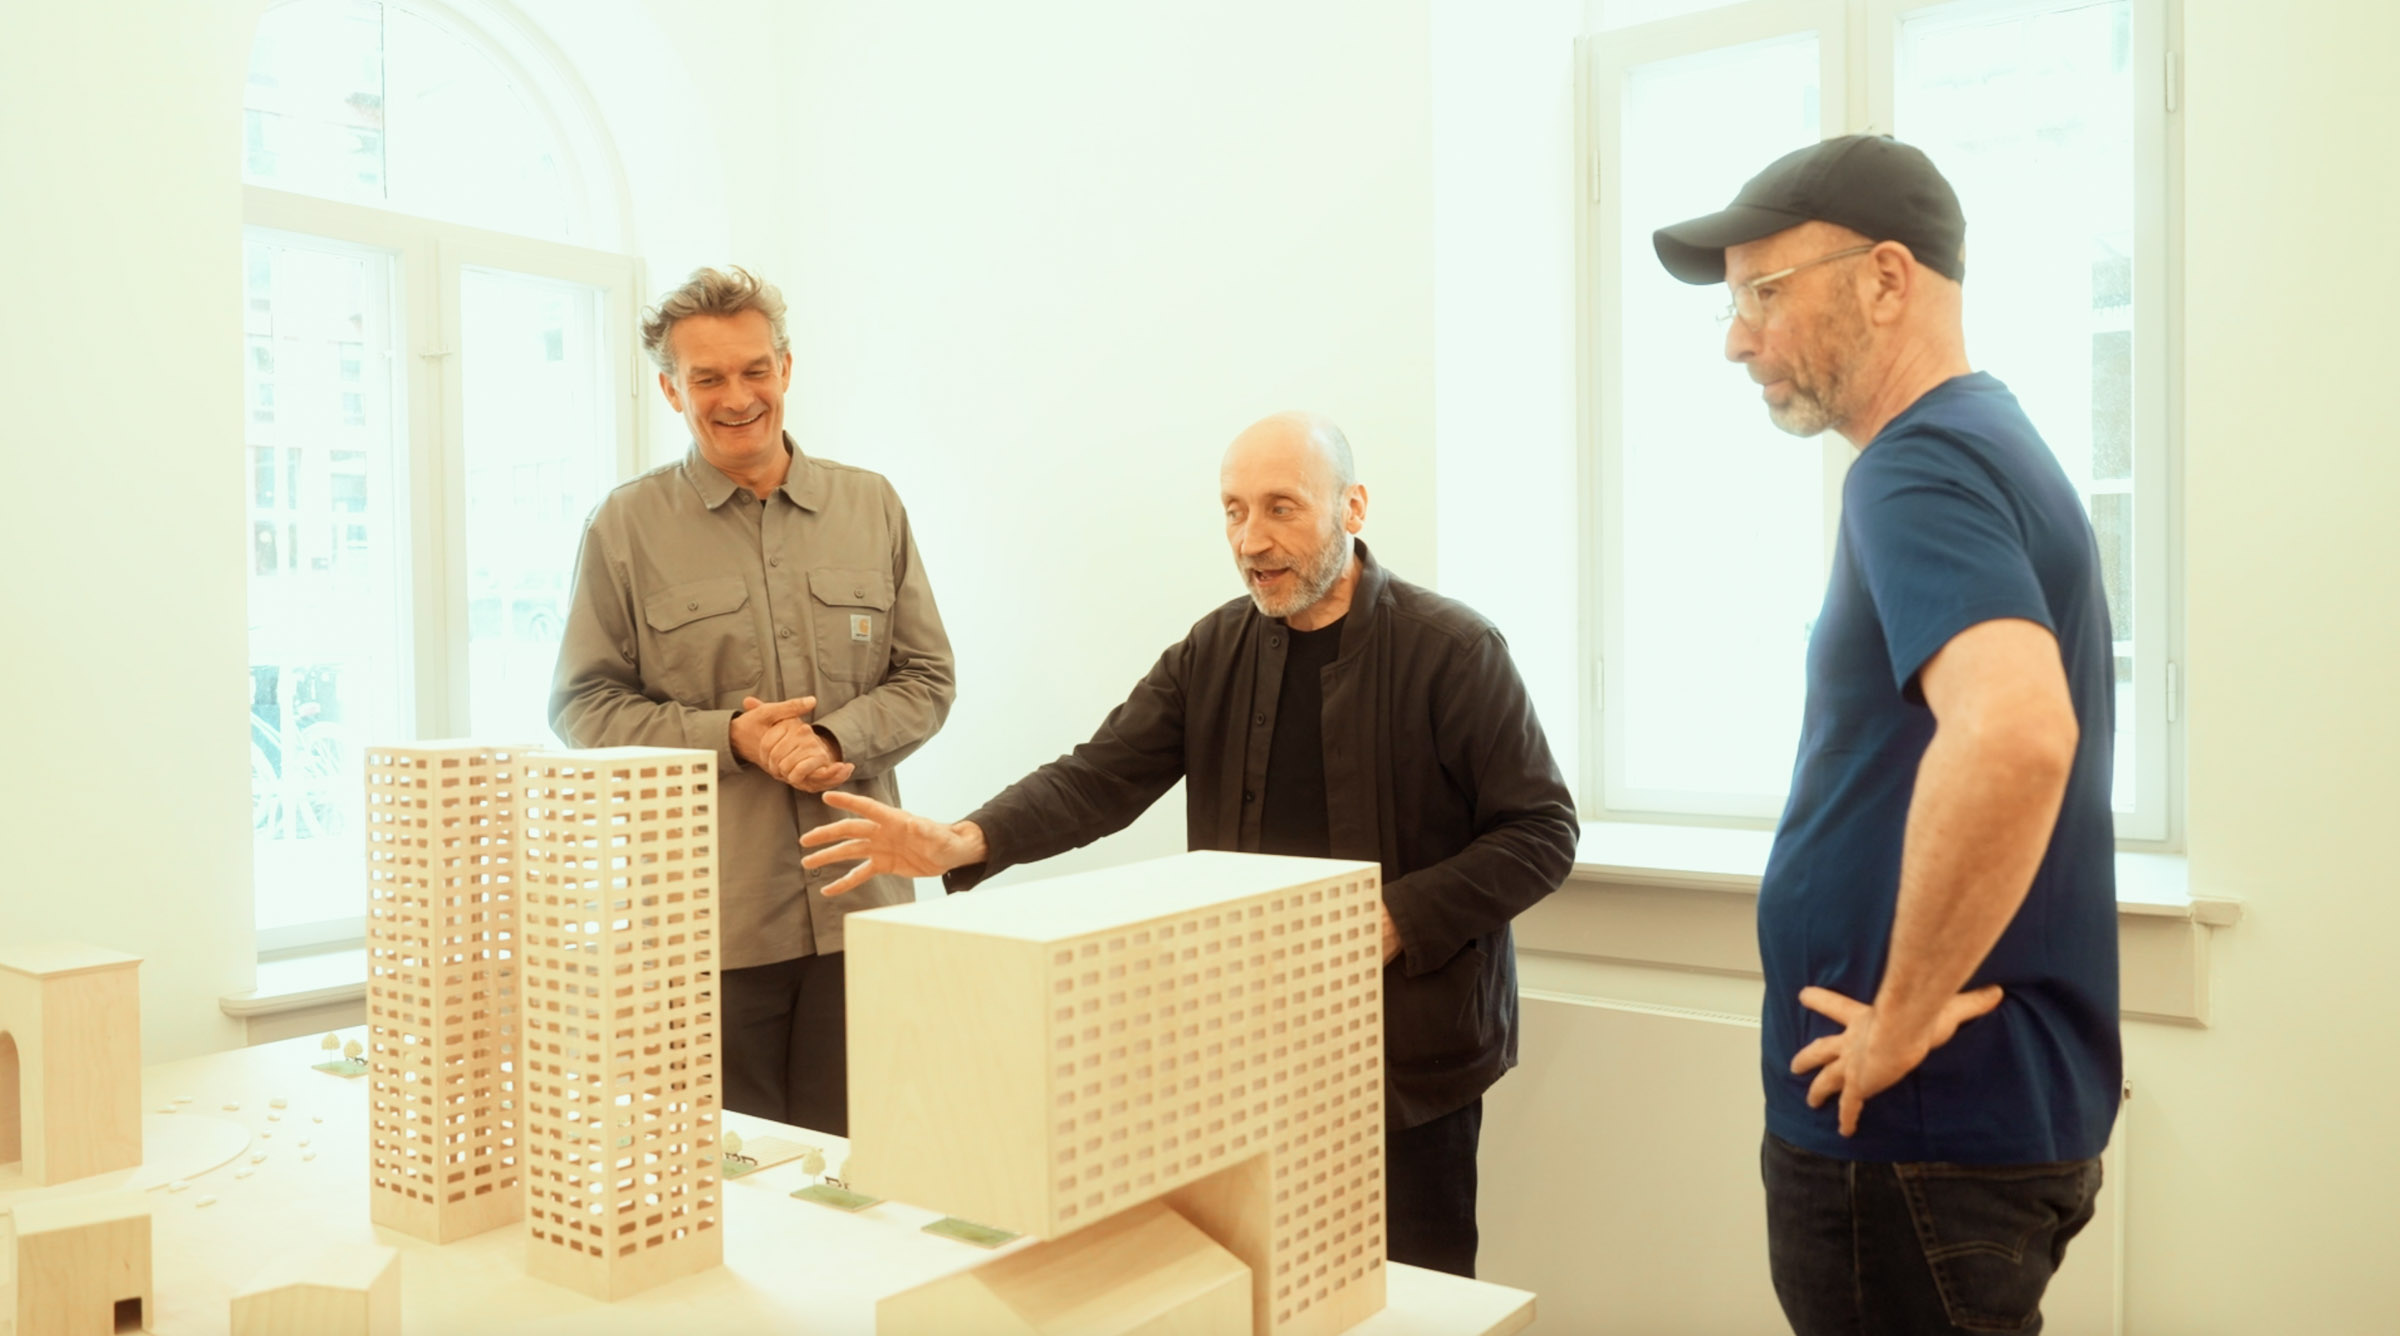 An inspiring conversation between John Wood & Paul Harrison and architect Peter Bur Andersen on new ideas for urban planning